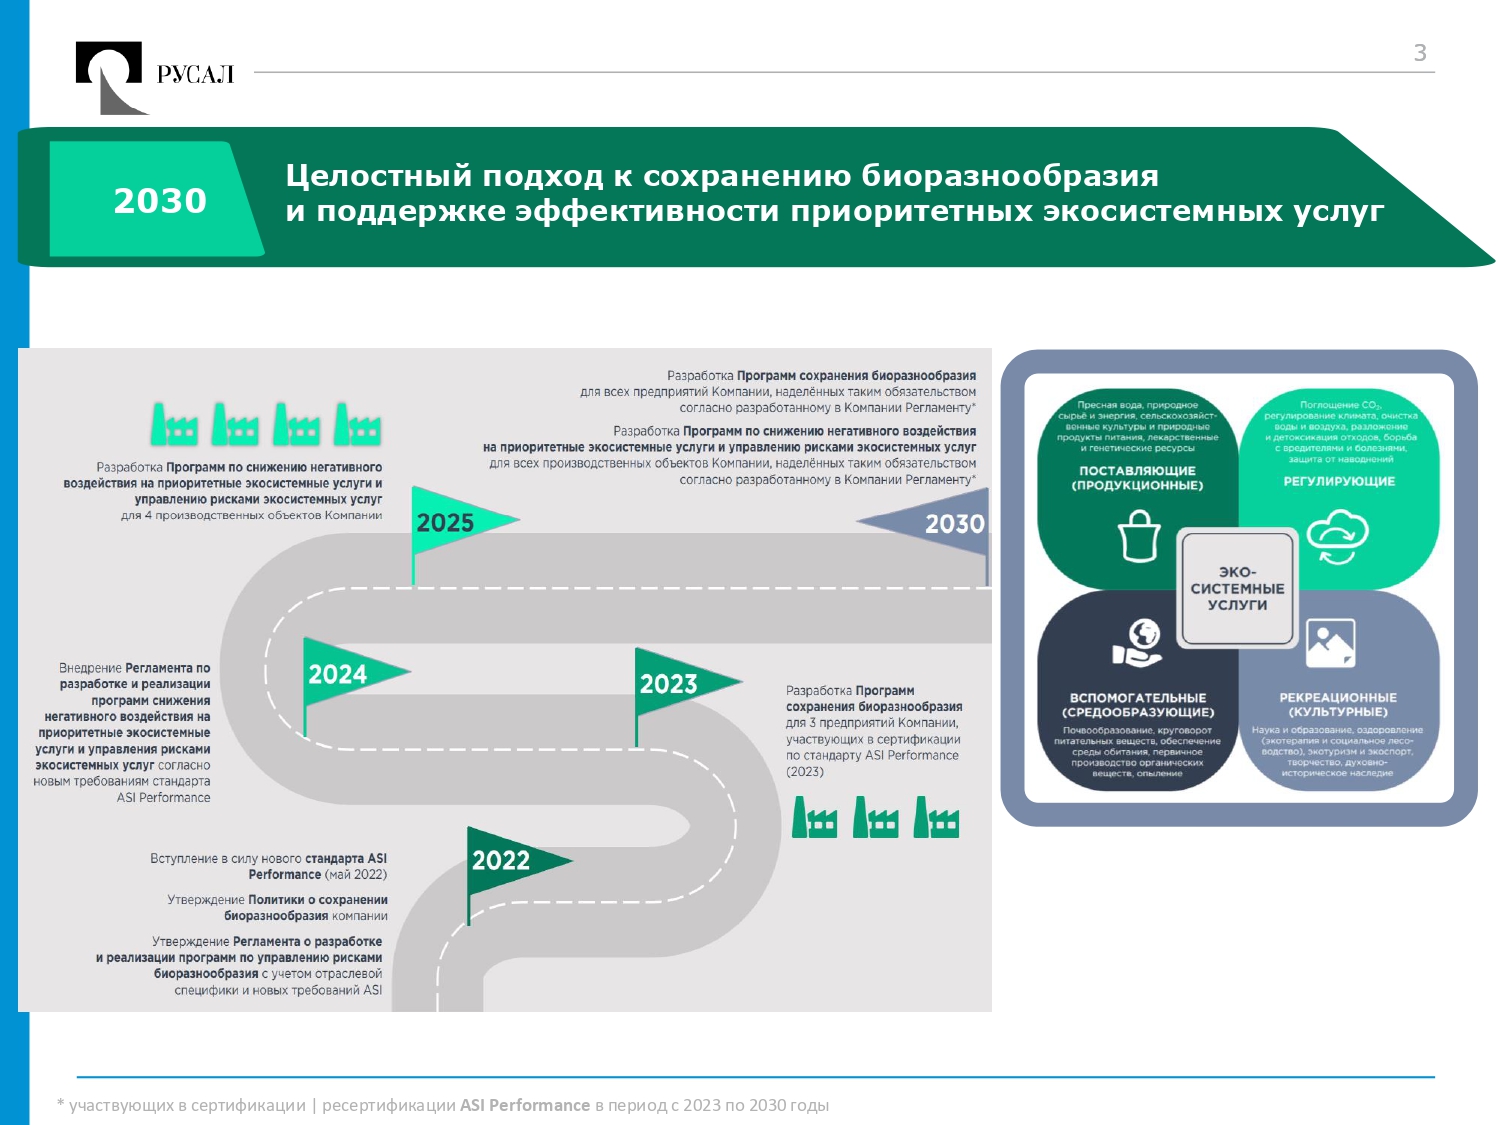 RUSAL Biodiversity 20220217-blue-green var6_page-0003